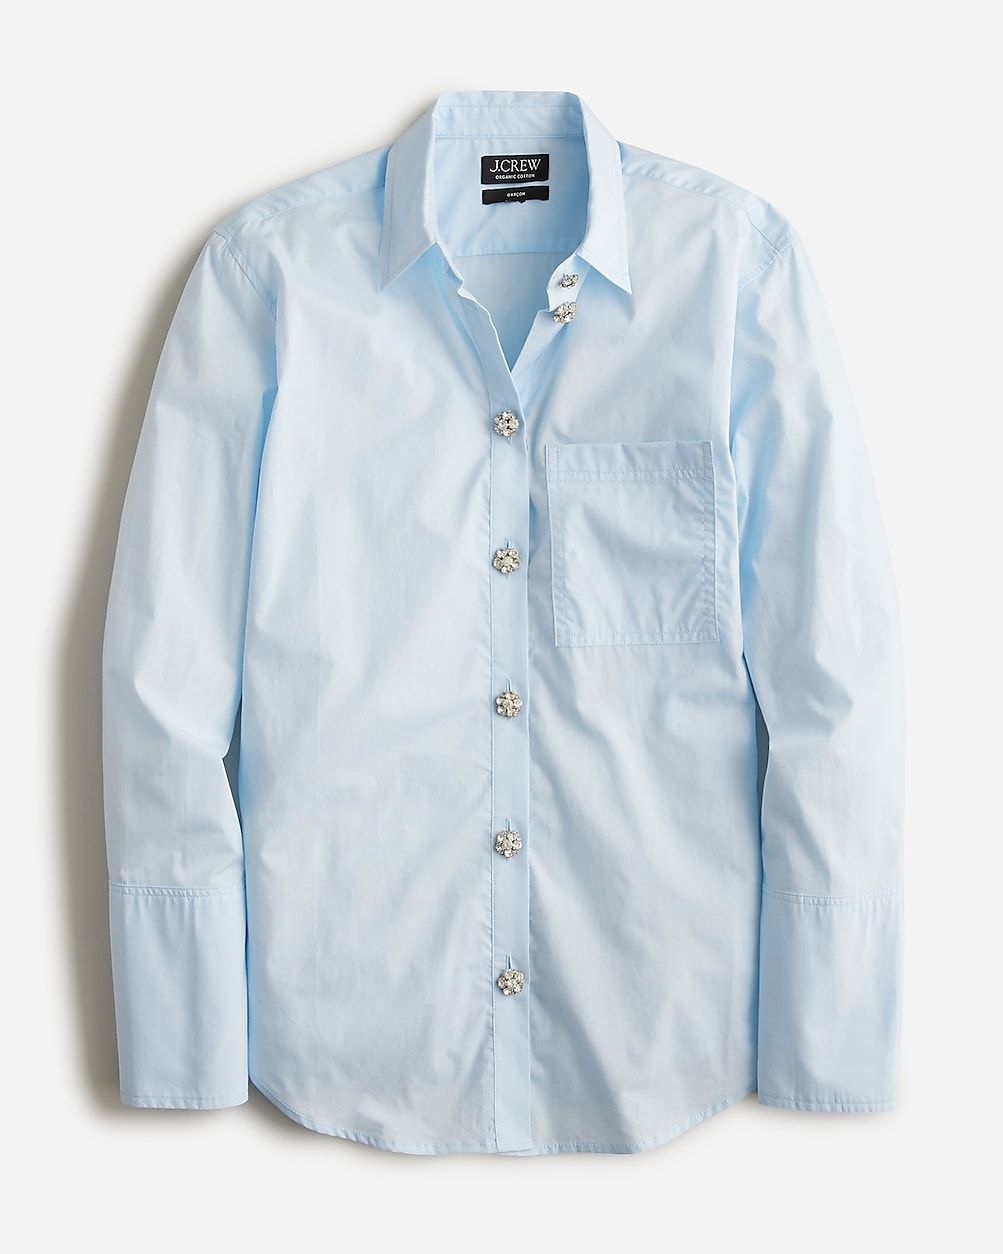 Garçon classic shirt with jewel buttons in cotton poplin | J.Crew US